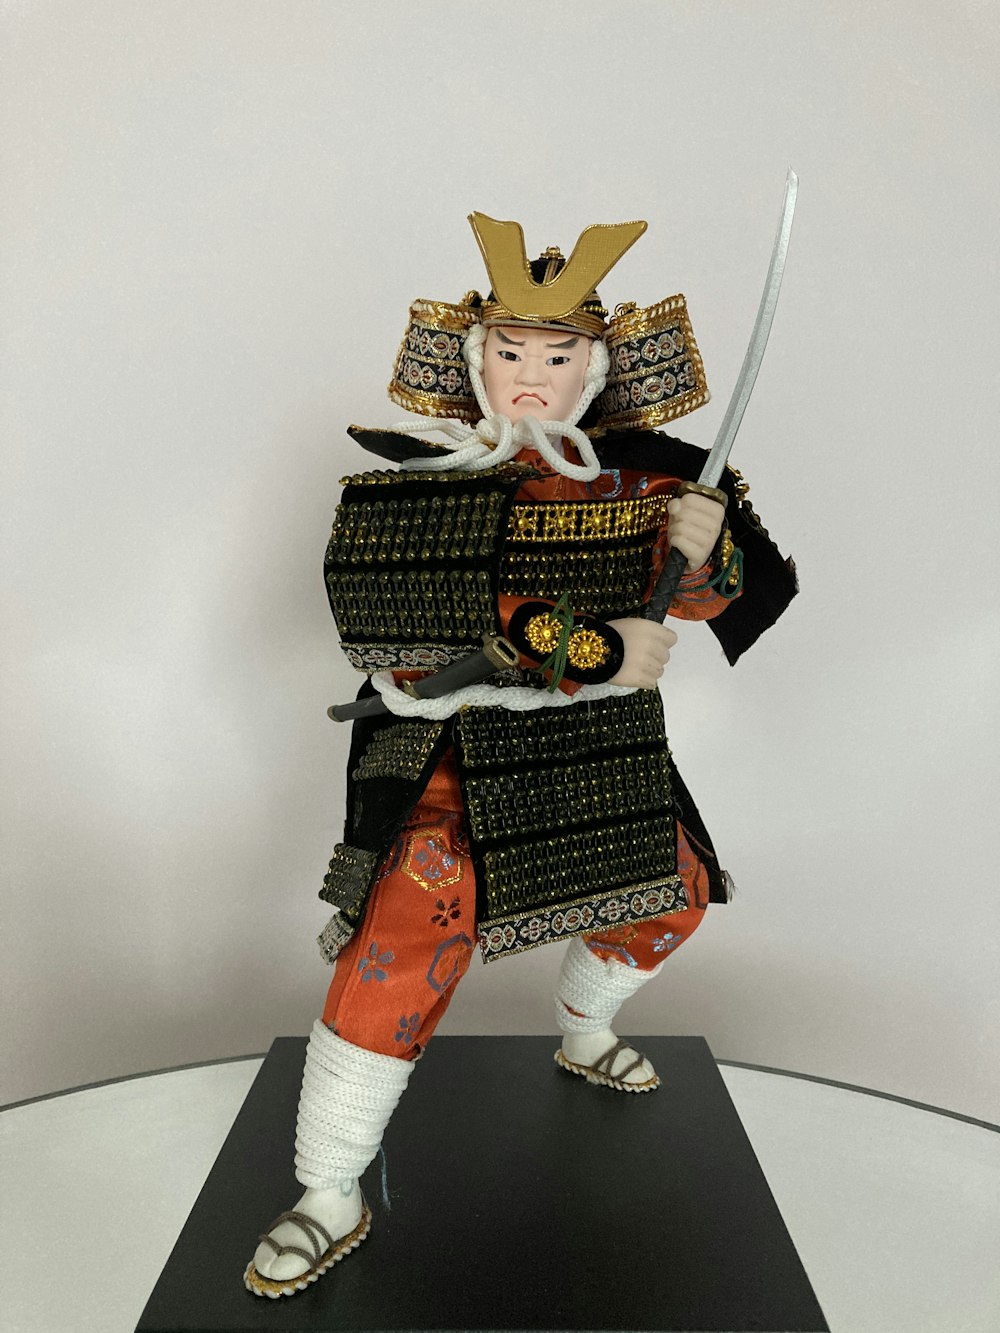 a figurine of a man dressed as a samurai holding a sword